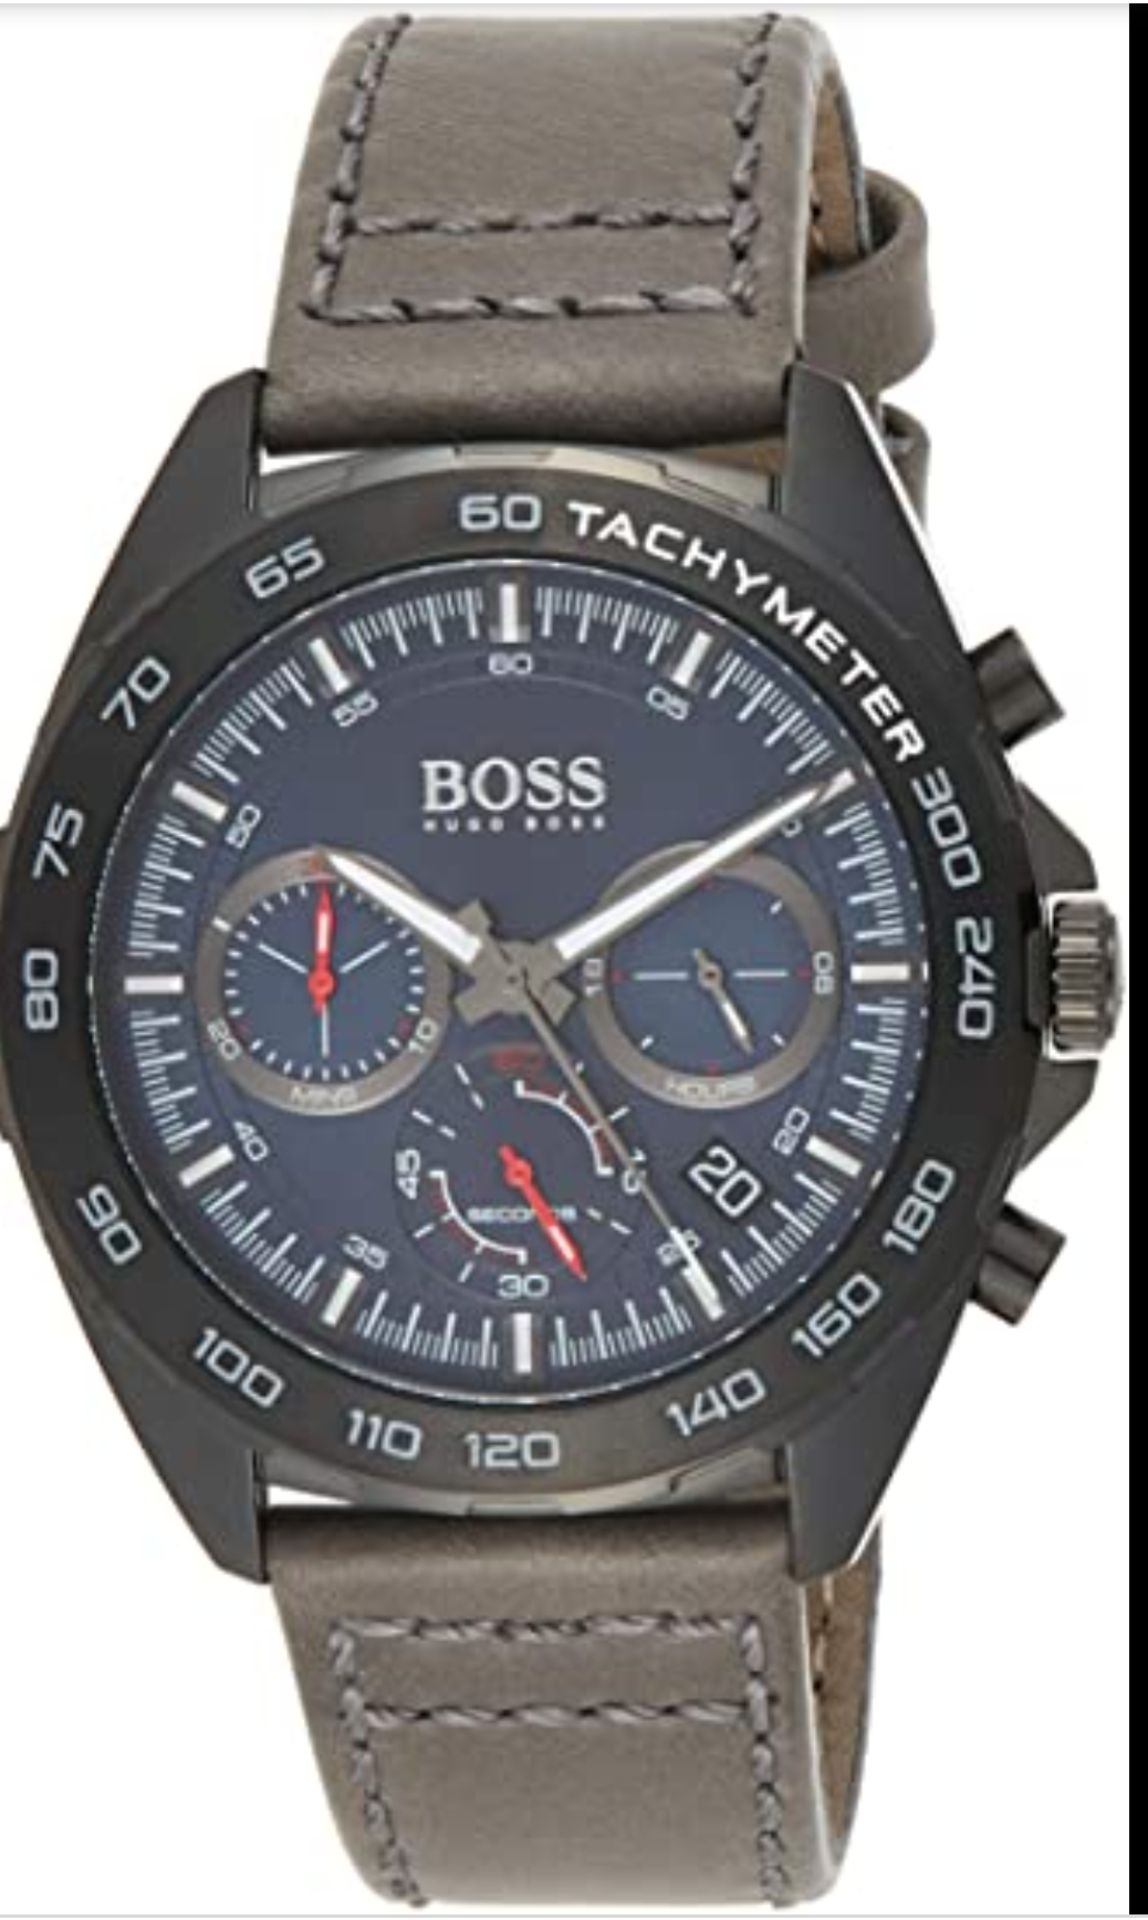 Hugo Boss 1513679 Men's Intensity Grey Leather Strap Chronograph Watch - Image 2 of 5